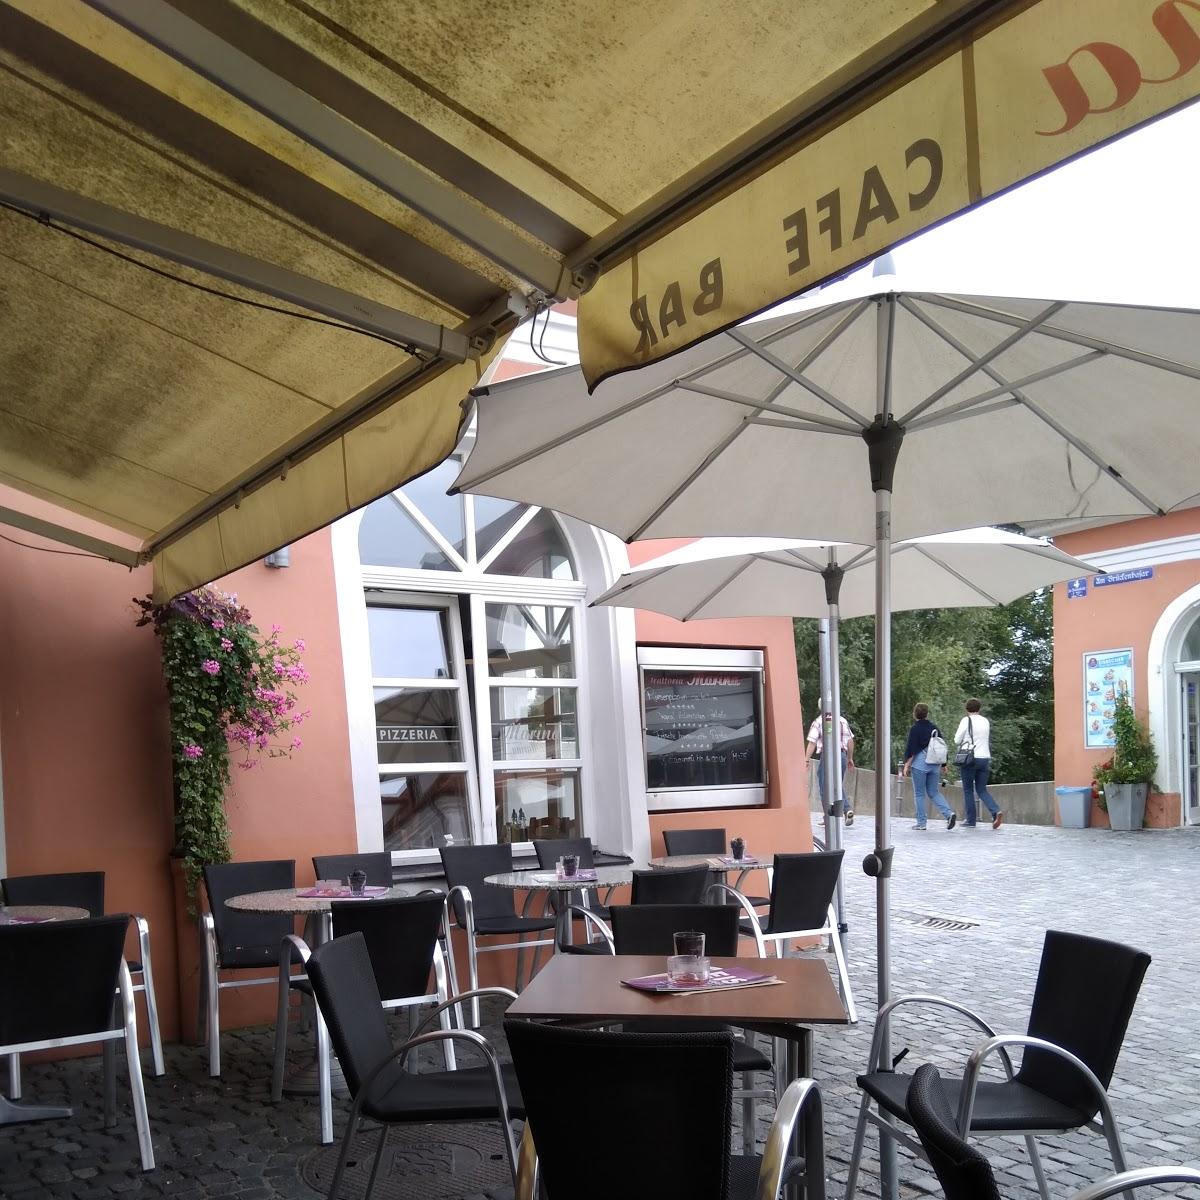 Restaurant "Trattoria Marina - Pizzeria Ciao" in Regensburg